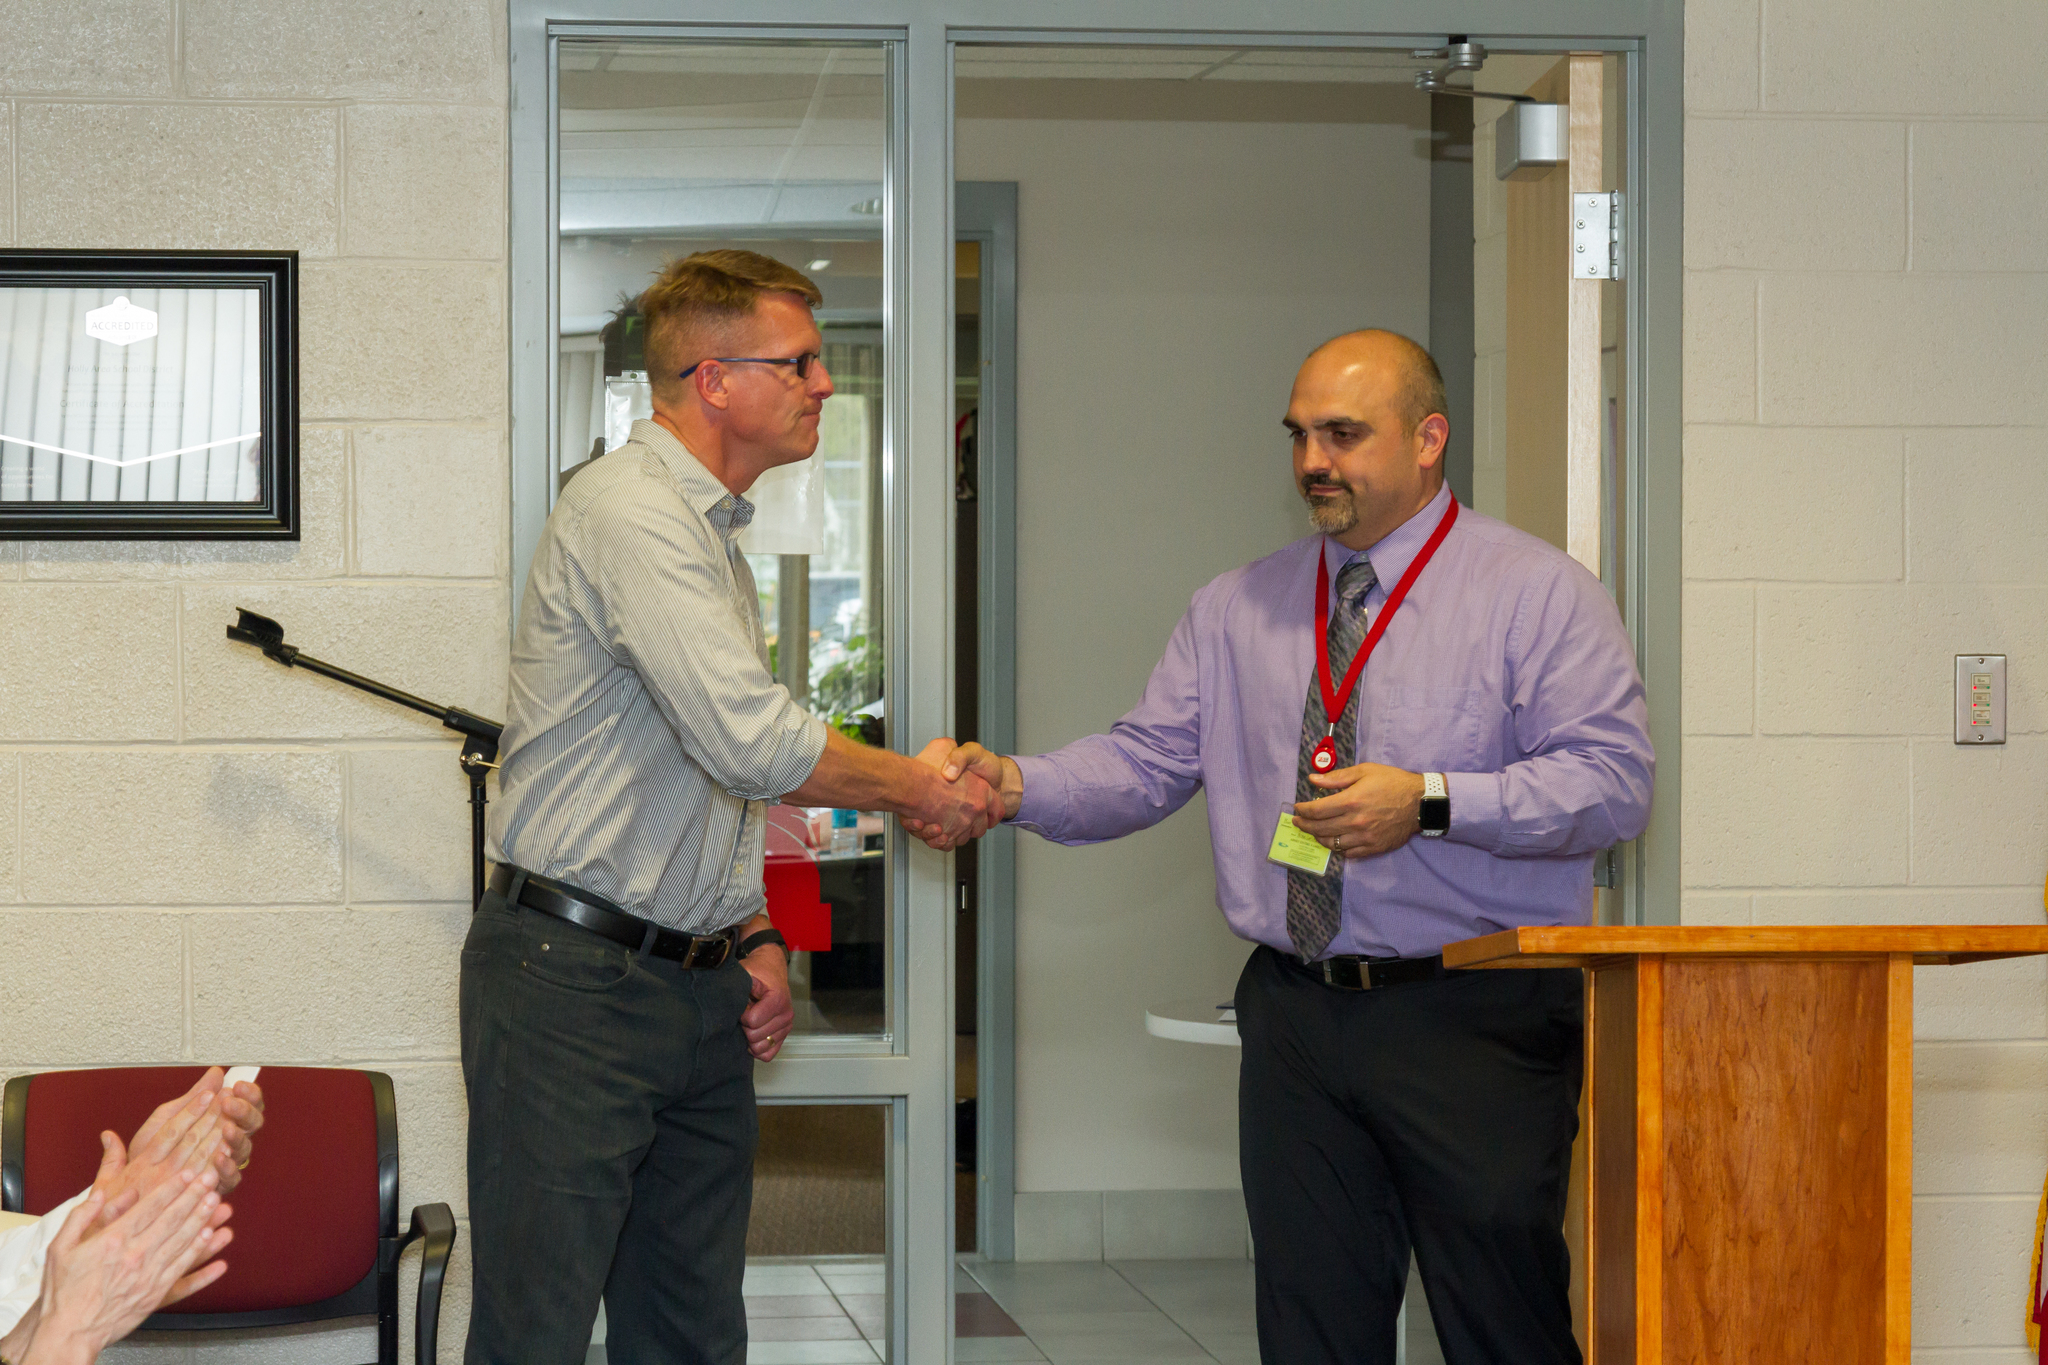 Mr. Millhouse receiving his award with Mr. Lofiego